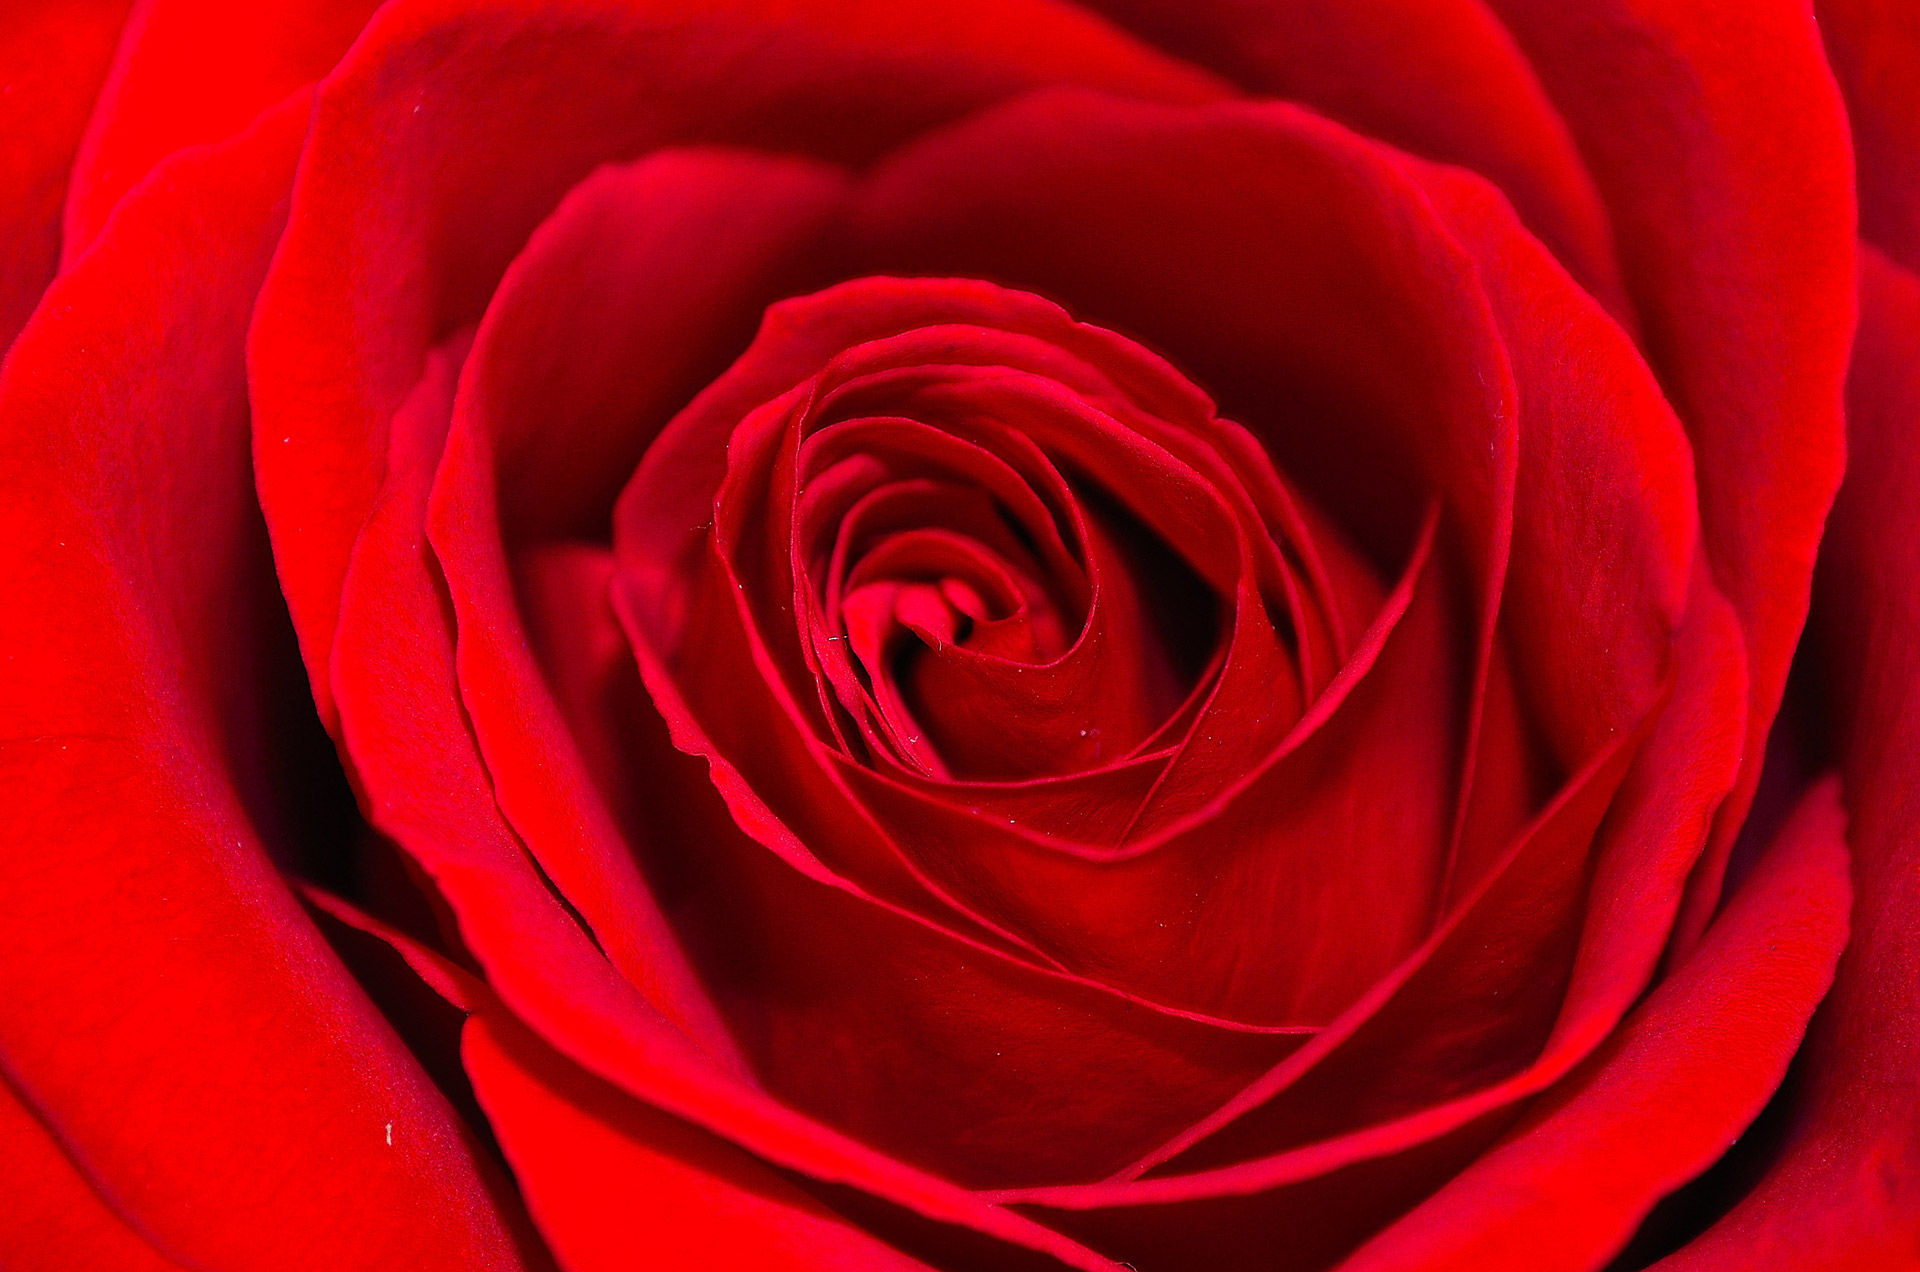 Amazing Red Rose Art